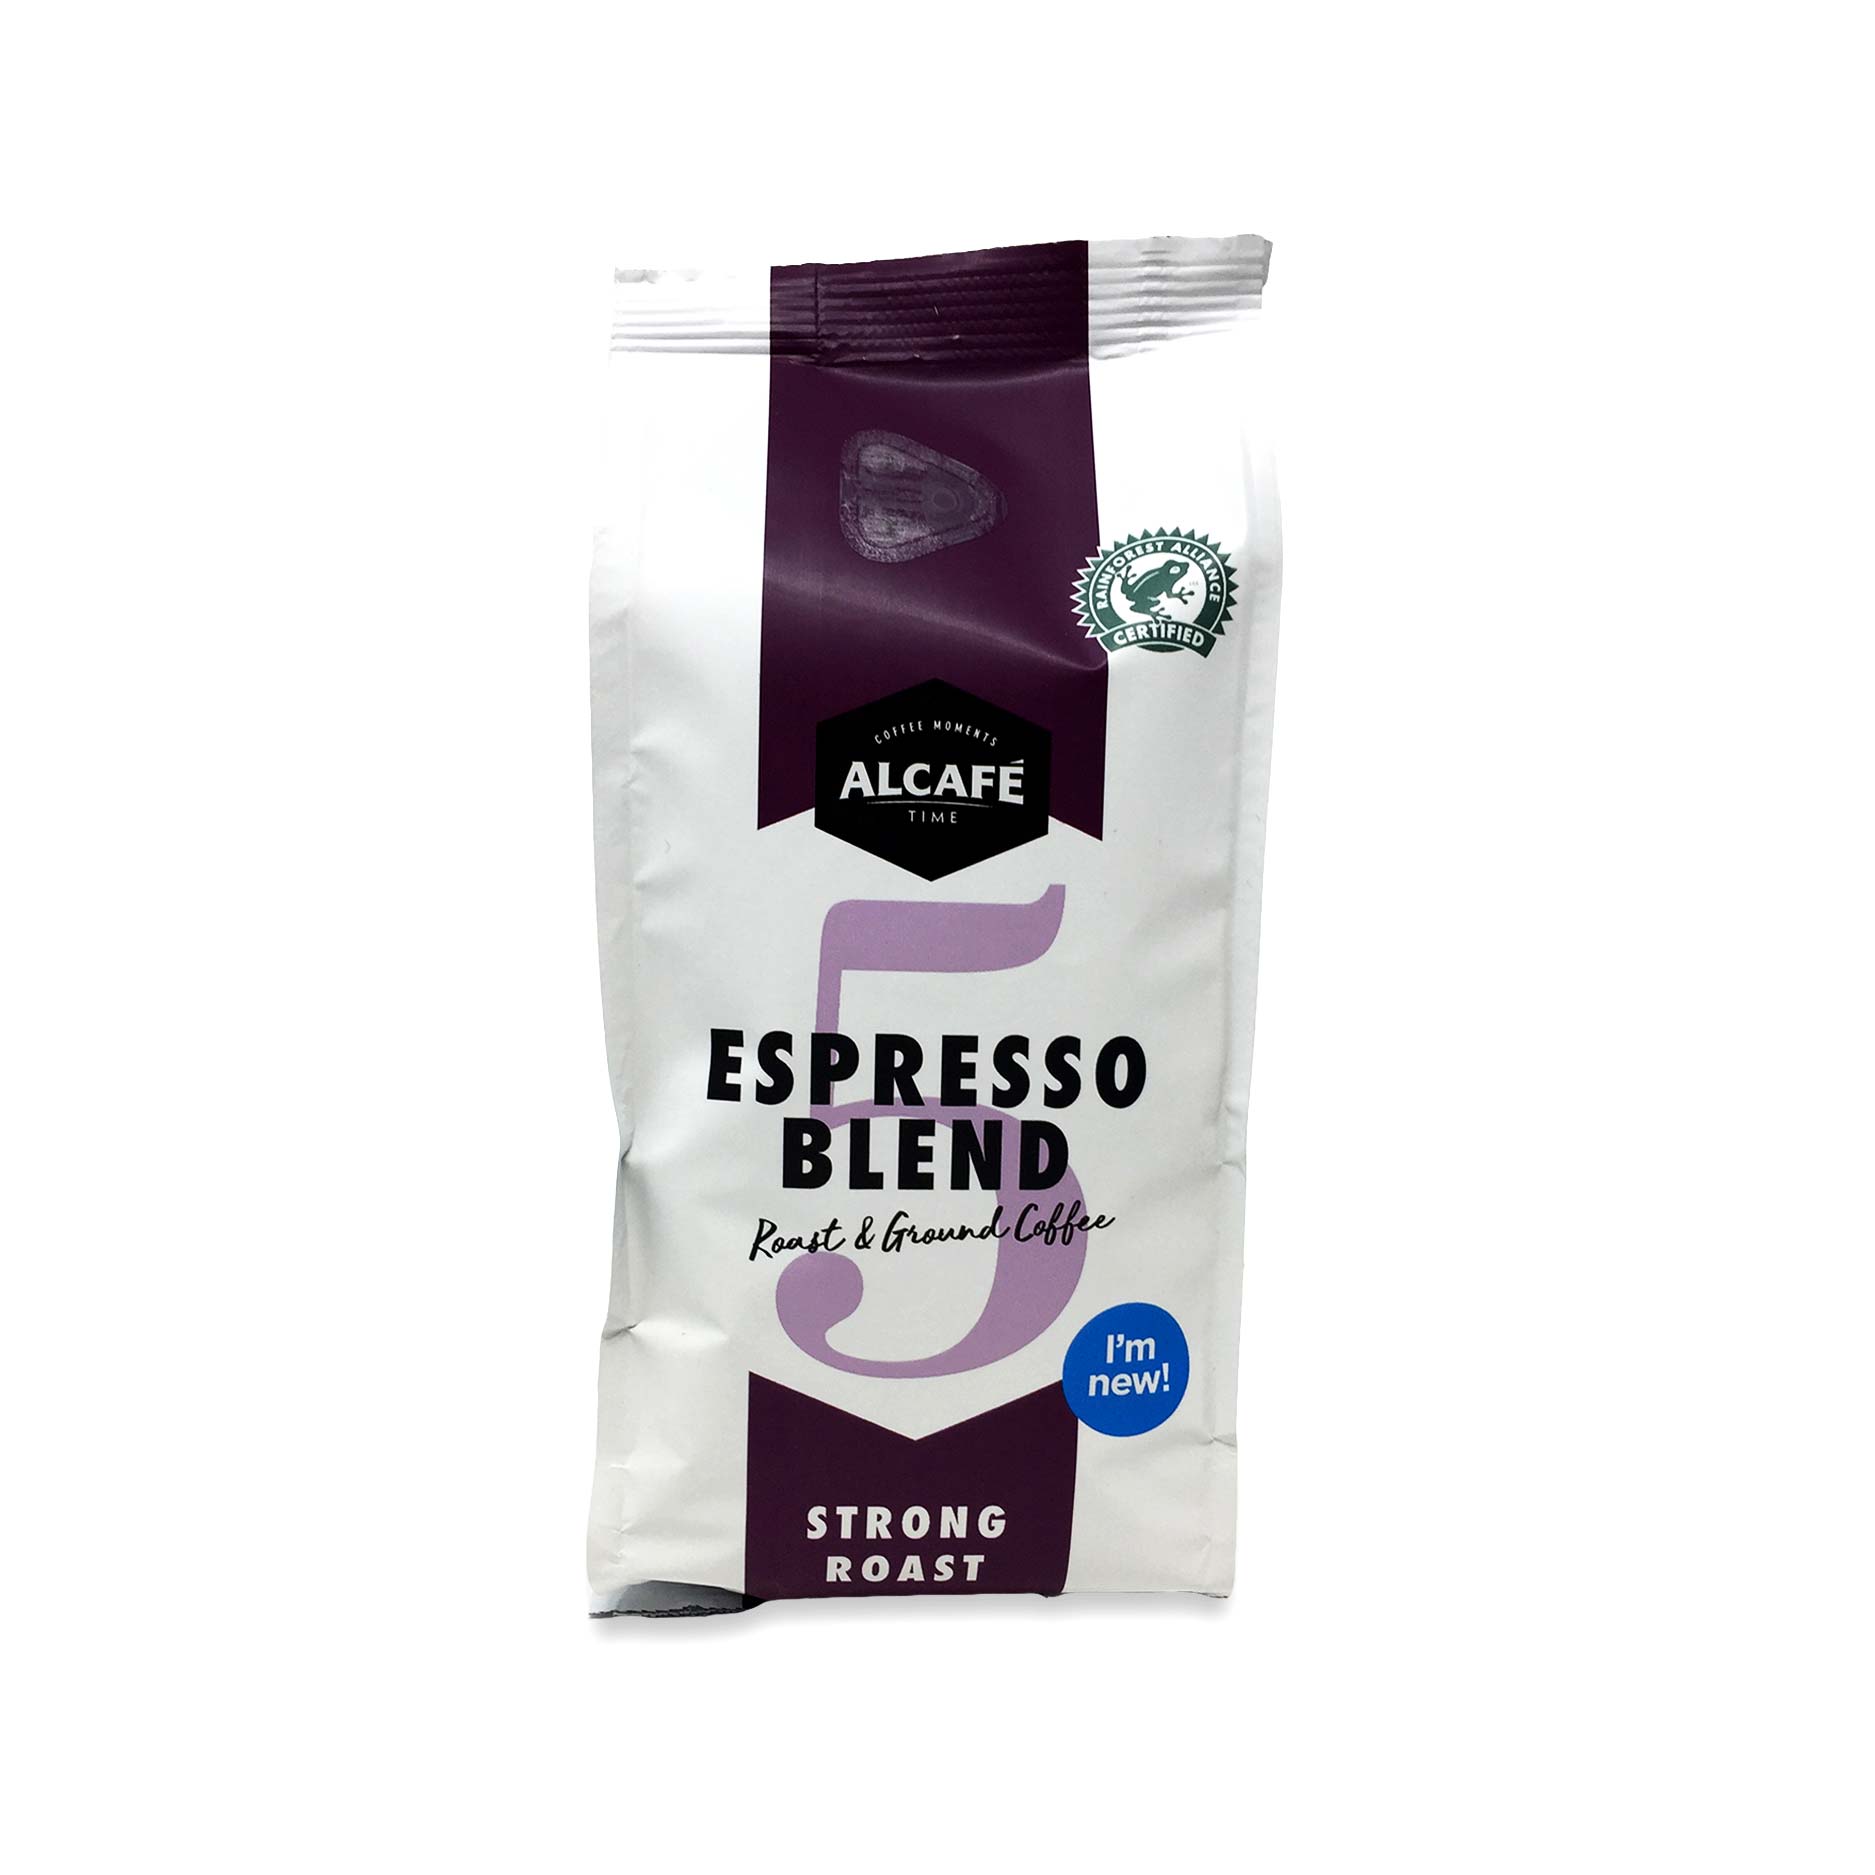 Alcafé 5 Espresso Blend Roast & Ground Coffee 227g ALDI